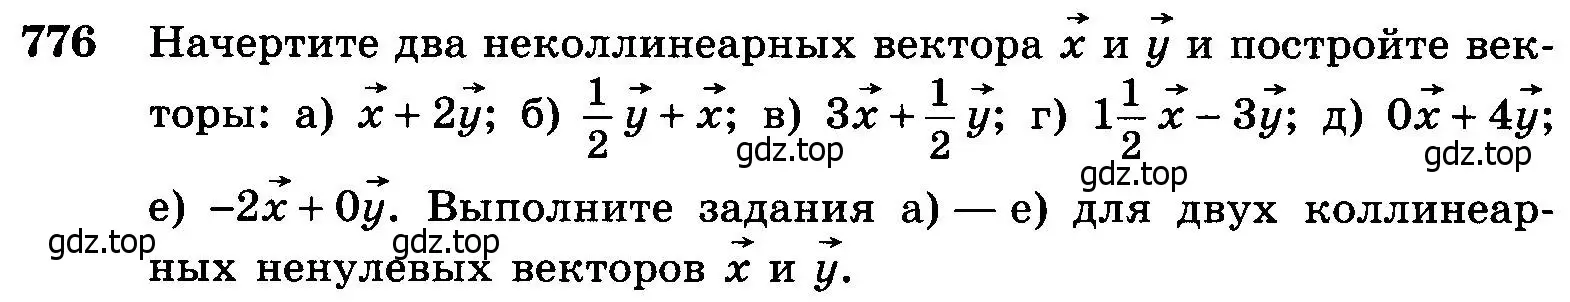 Условие номер 776 (страница 206) гдз по геометрии 7-9 класс Атанасян, Бутузов, учебник